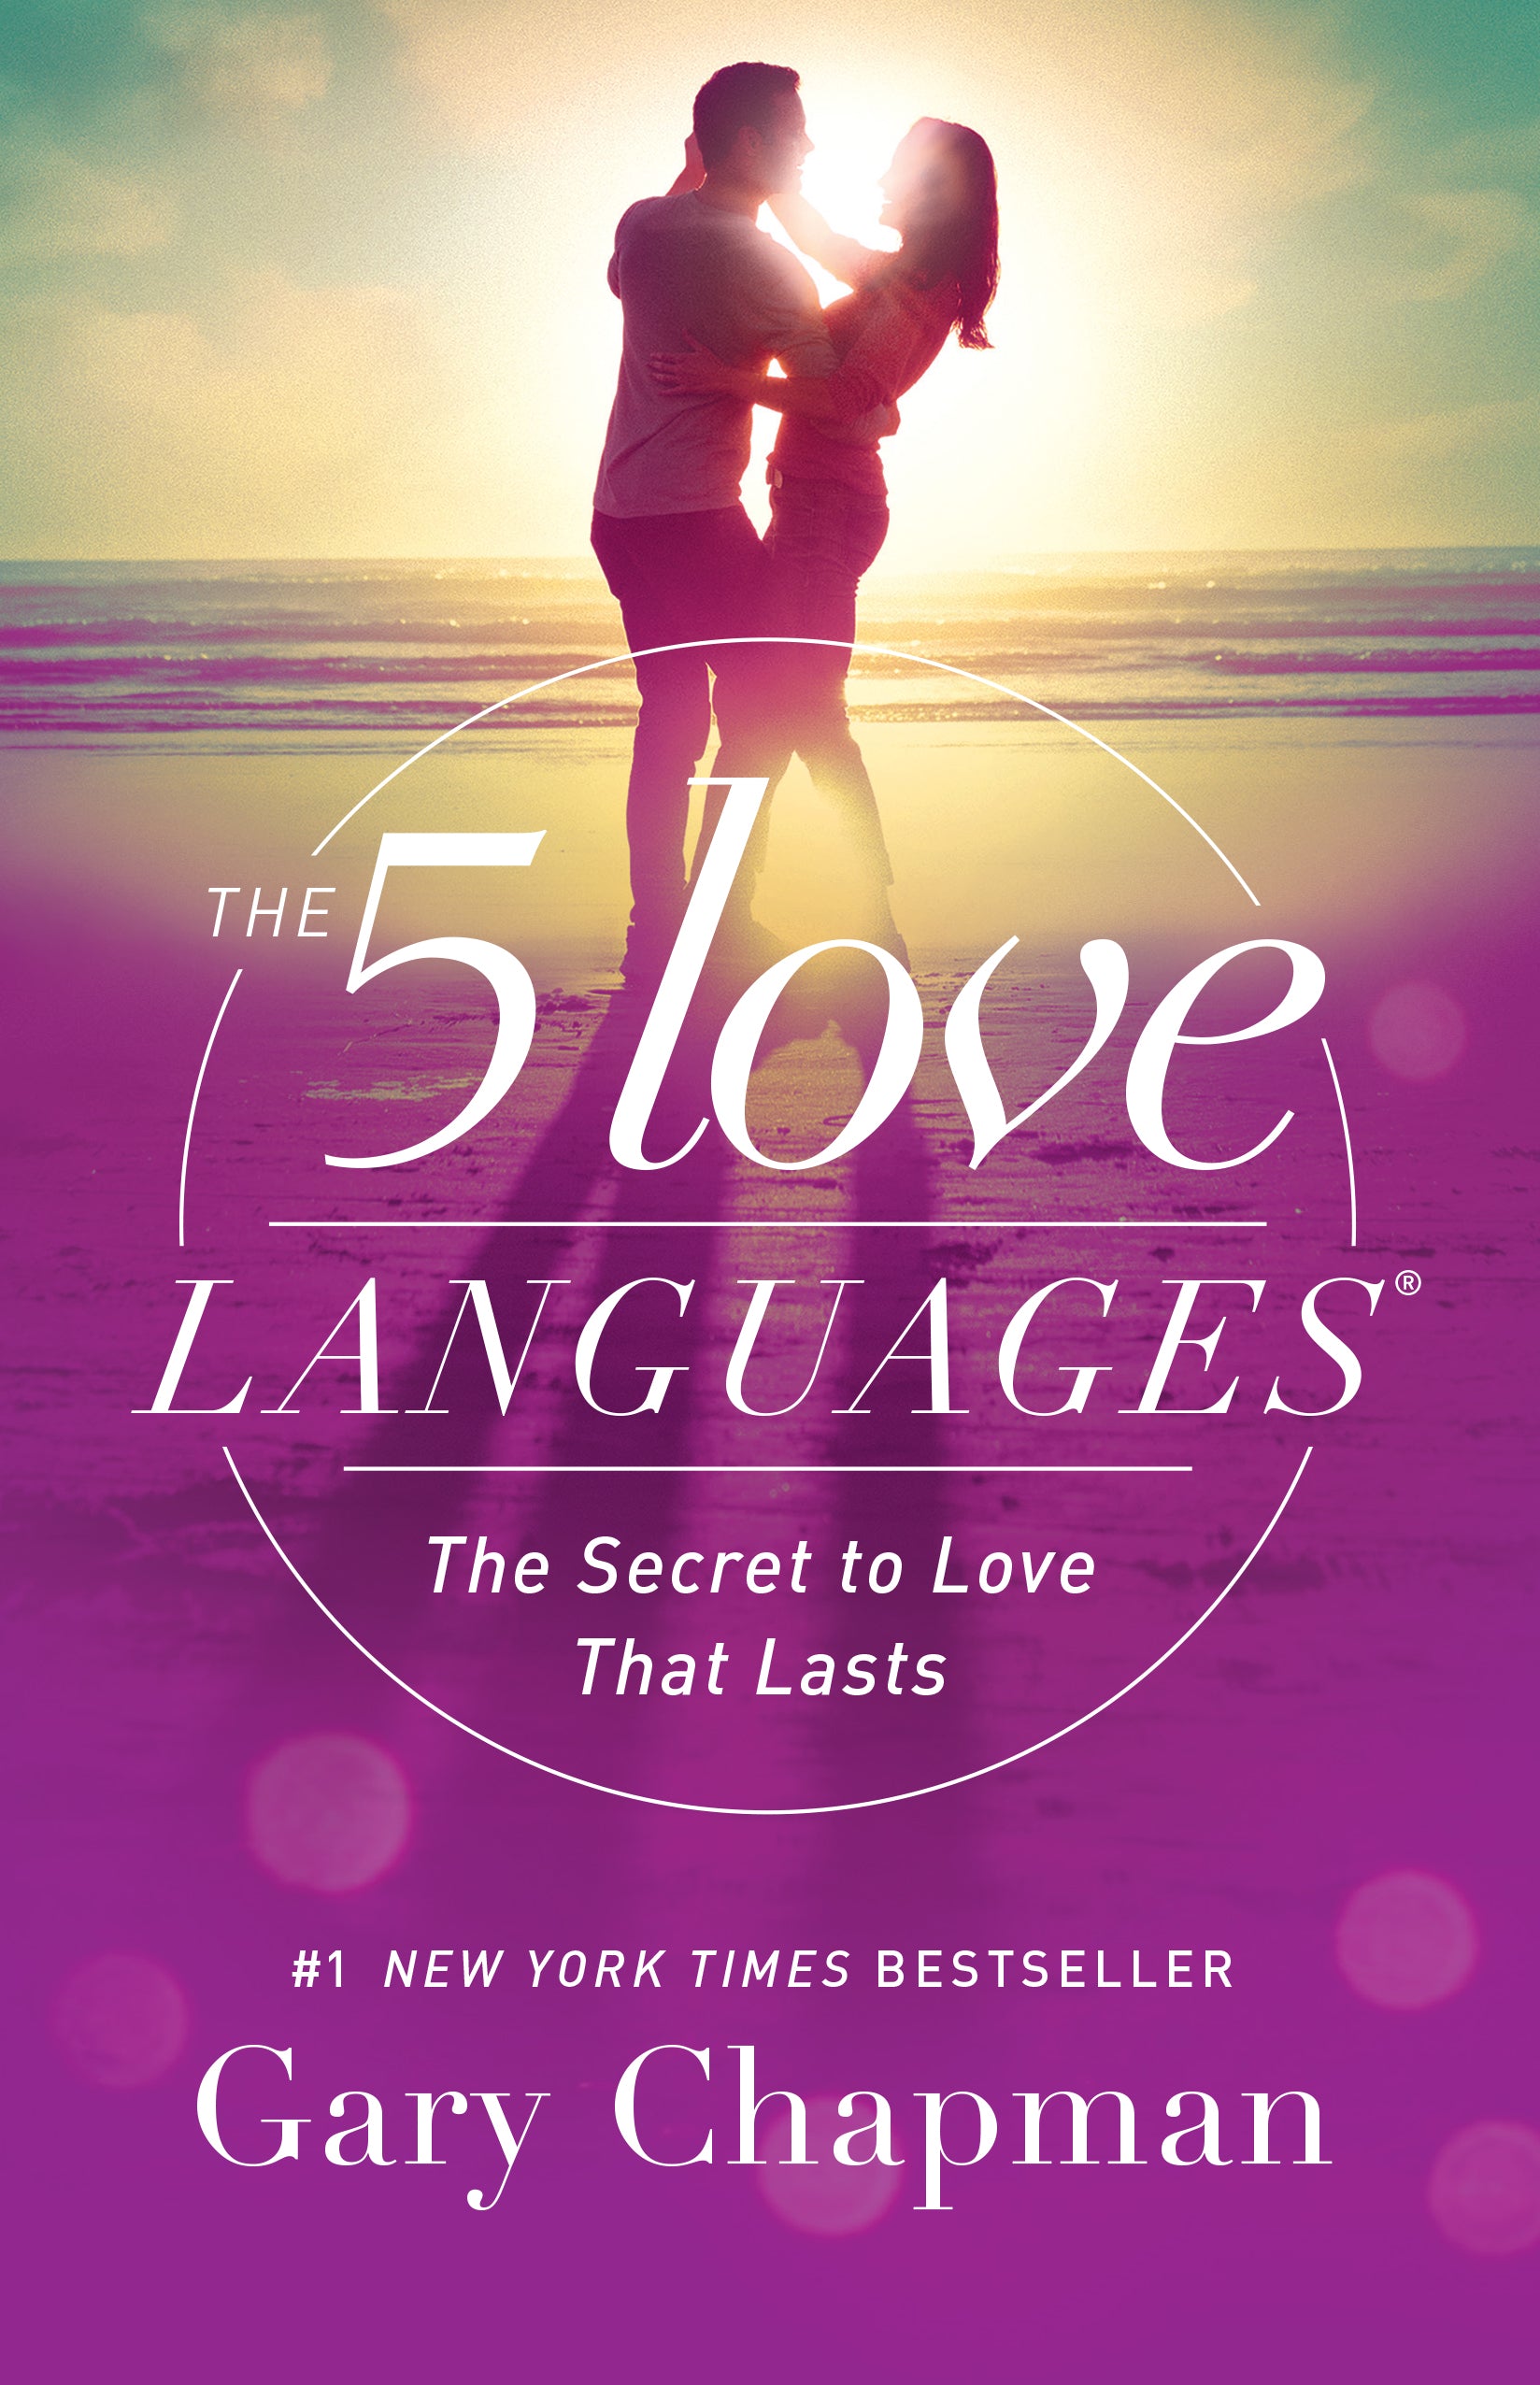 The Five Love Languages; Gary Chapman